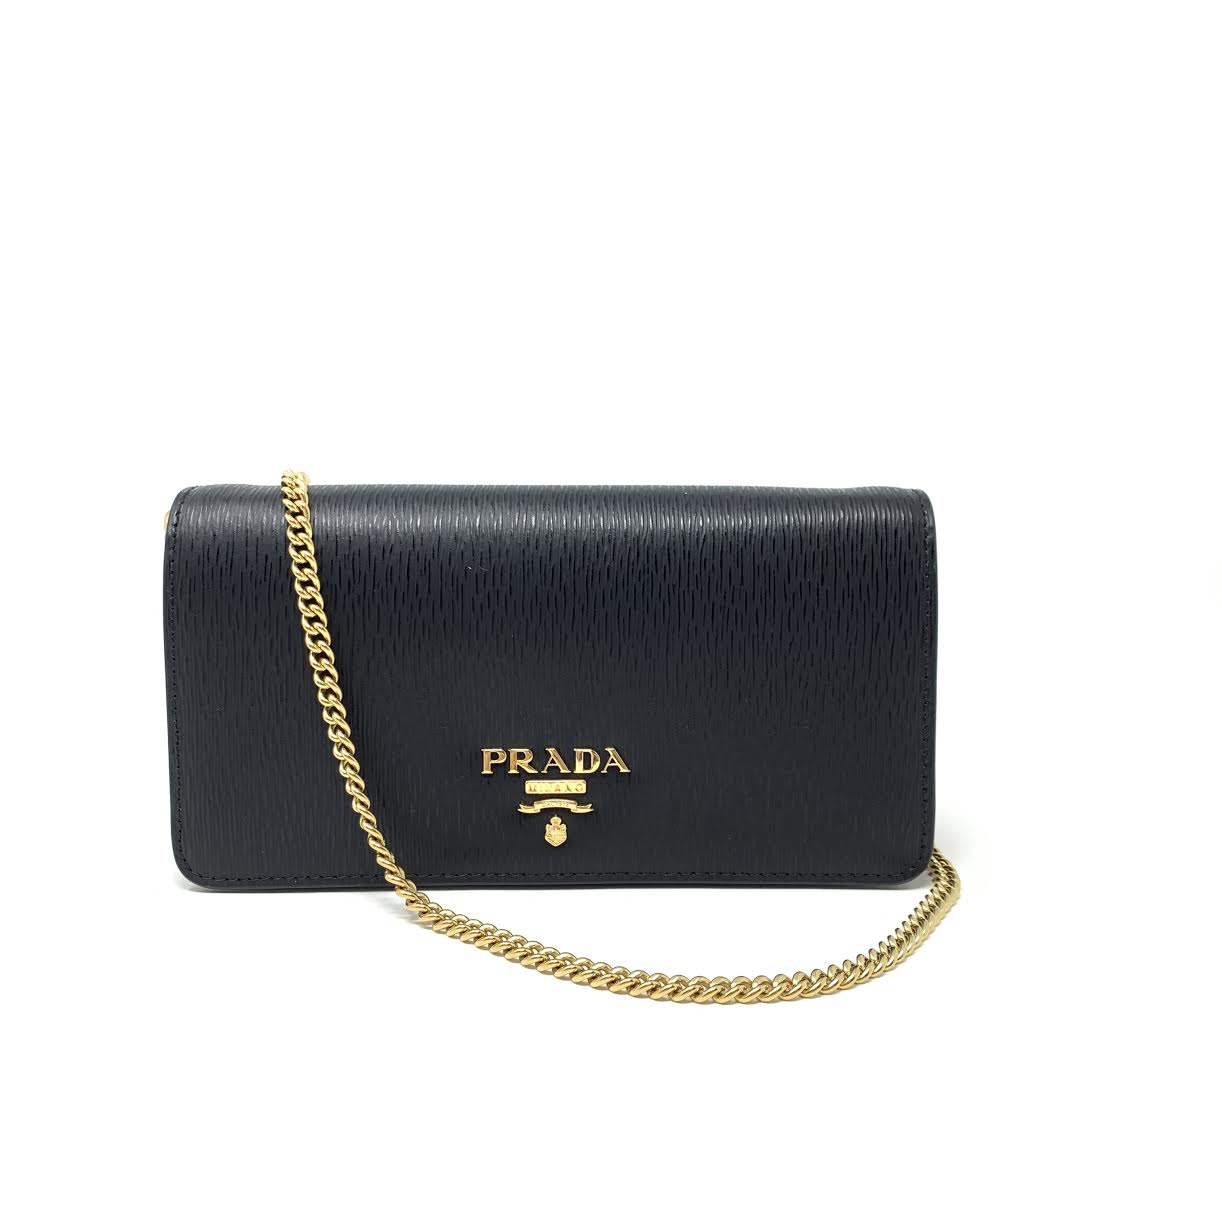 prada wallet on chain price